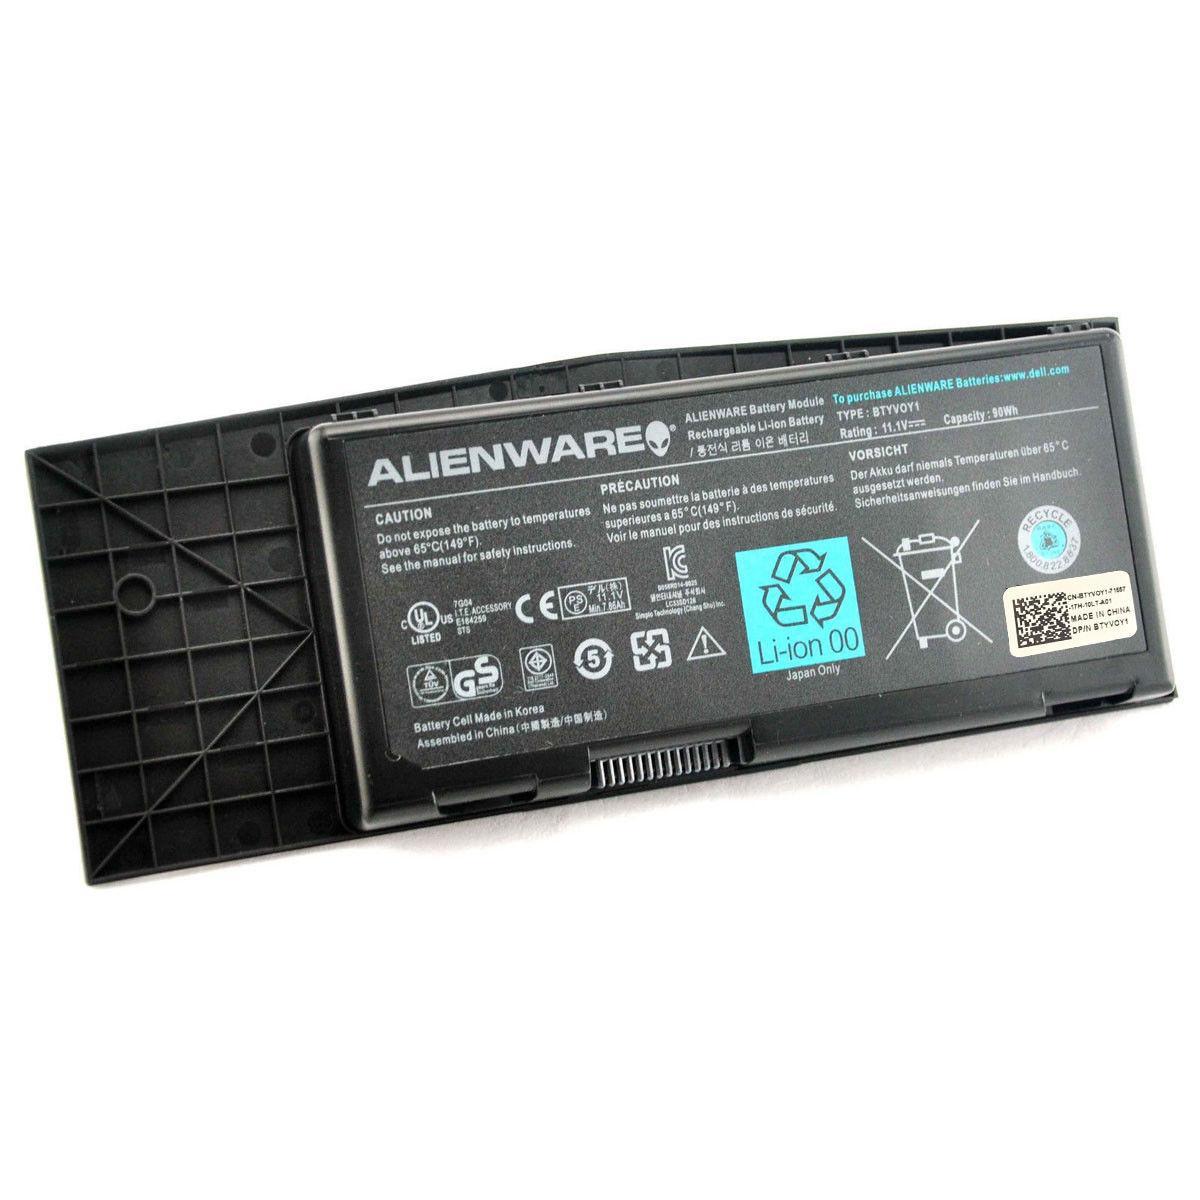 Аккумулятор для ноутбука Dell Alienware M17x R3 R4, BTYVOY1 (11.1V, 7860 mAh) Original